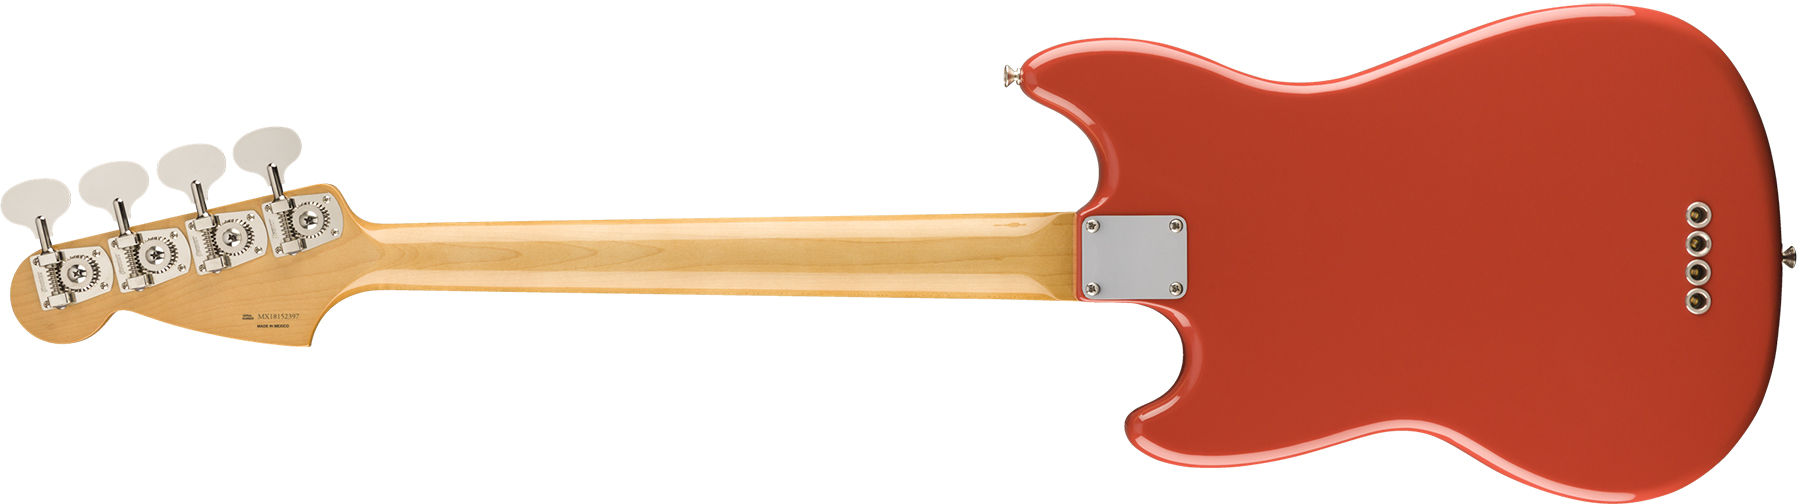 Fender Mustang Bass 60s Vintera Vintage Mex Pf - Fiesta Red - Basse Électrique Enfants - Variation 1